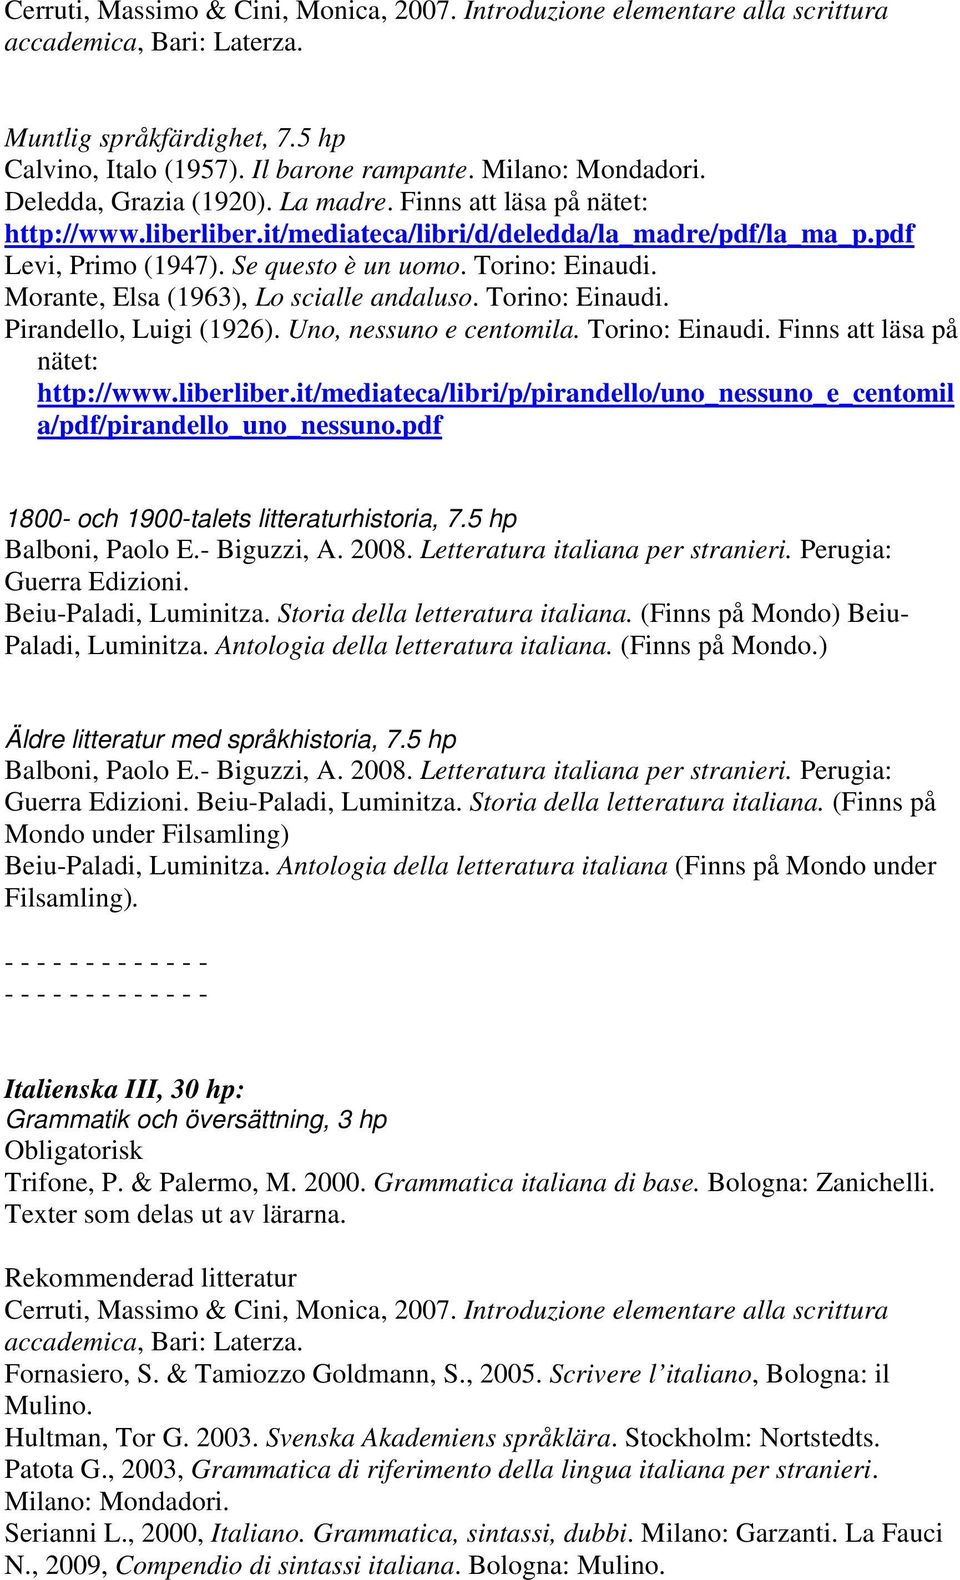 Morante, Elsa (1963), Lo scialle andaluso. Torino: Einaudi. Pirandello, Luigi (1926). Uno, nessuno e centomila. Torino: Einaudi. Finns att läsa på nätet: http://www.liberliber.